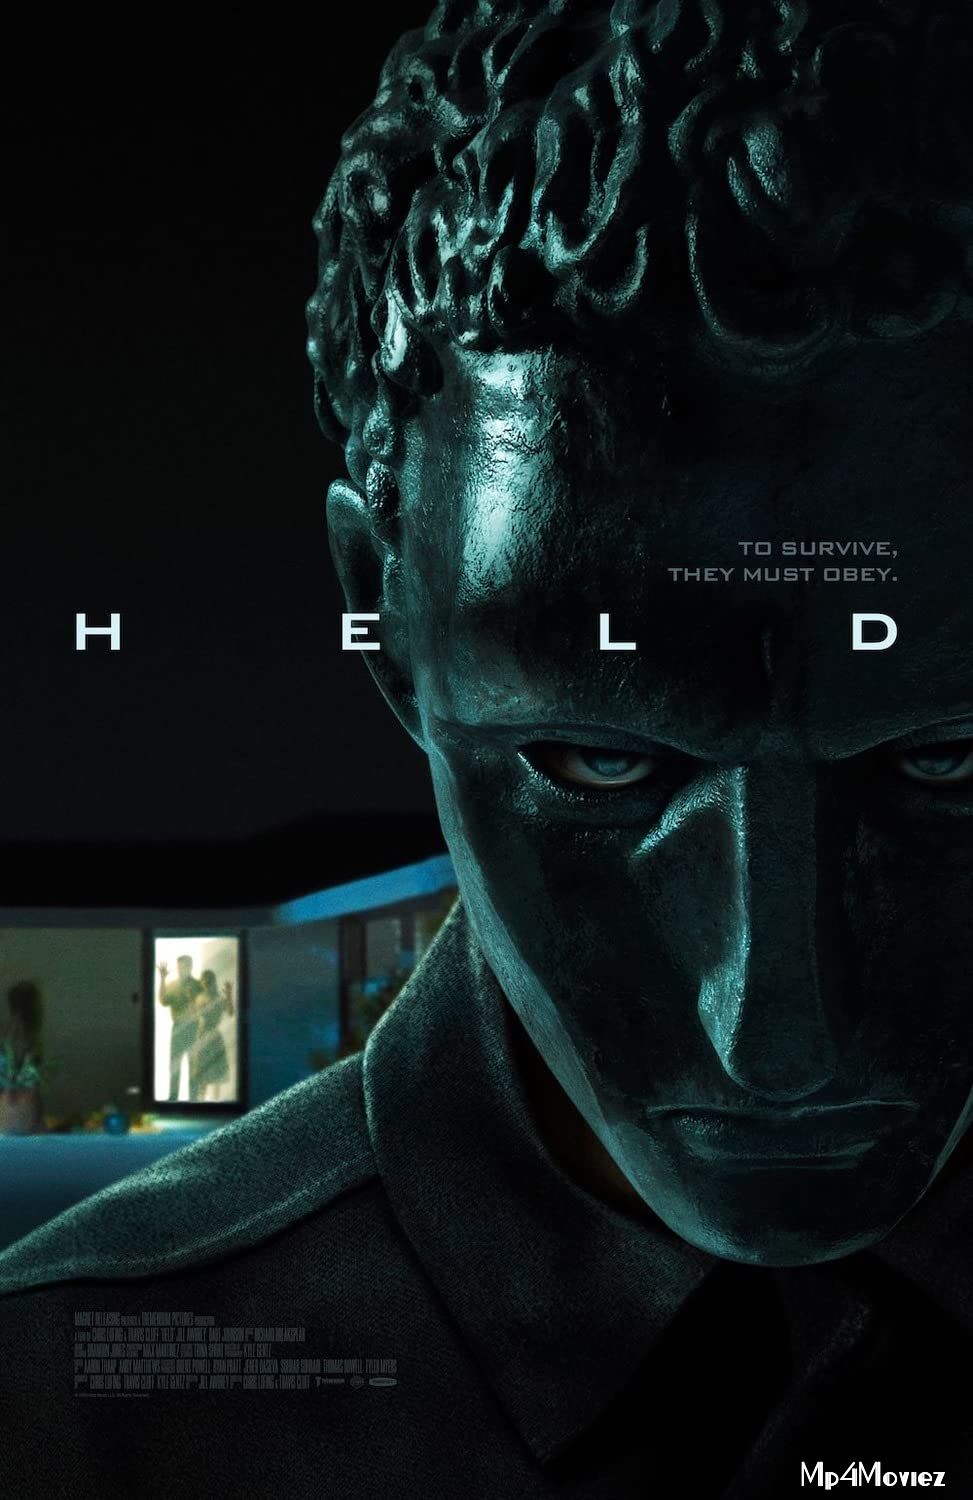 Held (2021) English HDRip download full movie